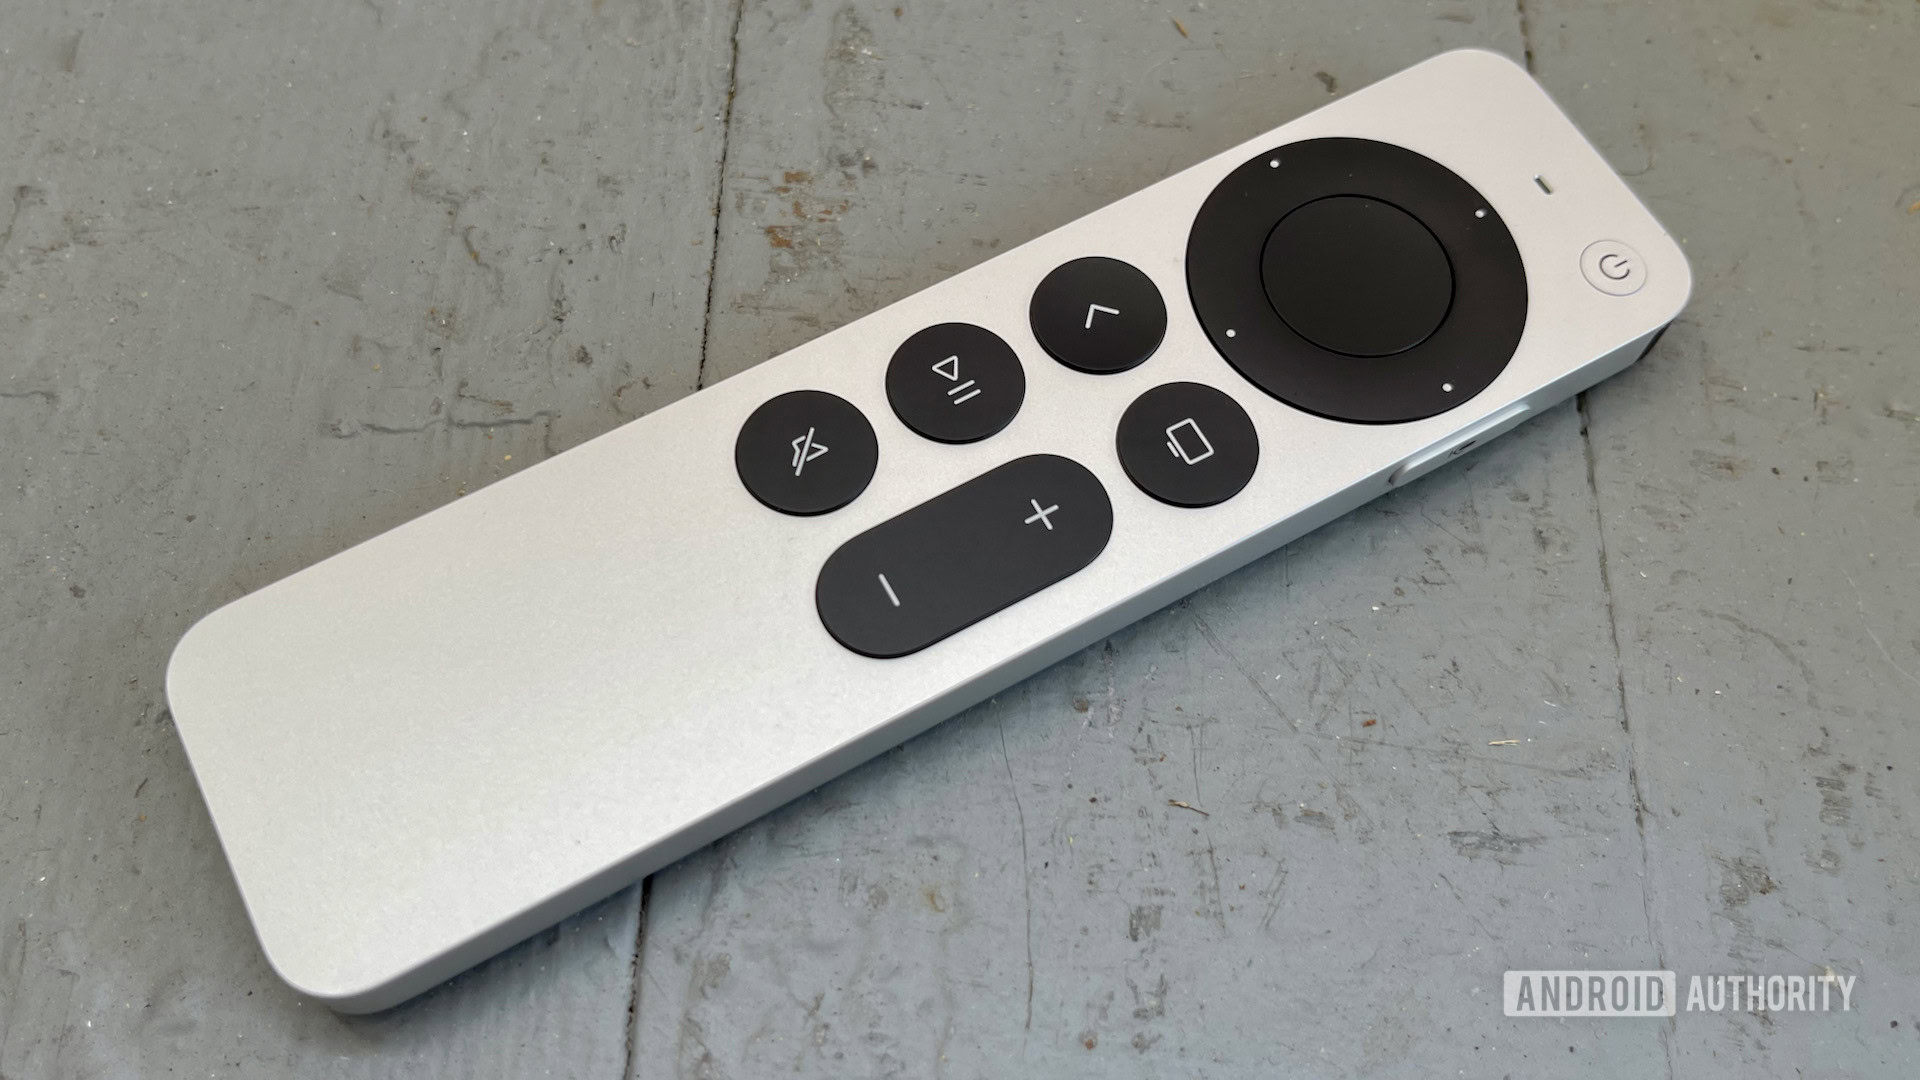 Apple TV 4K new remote